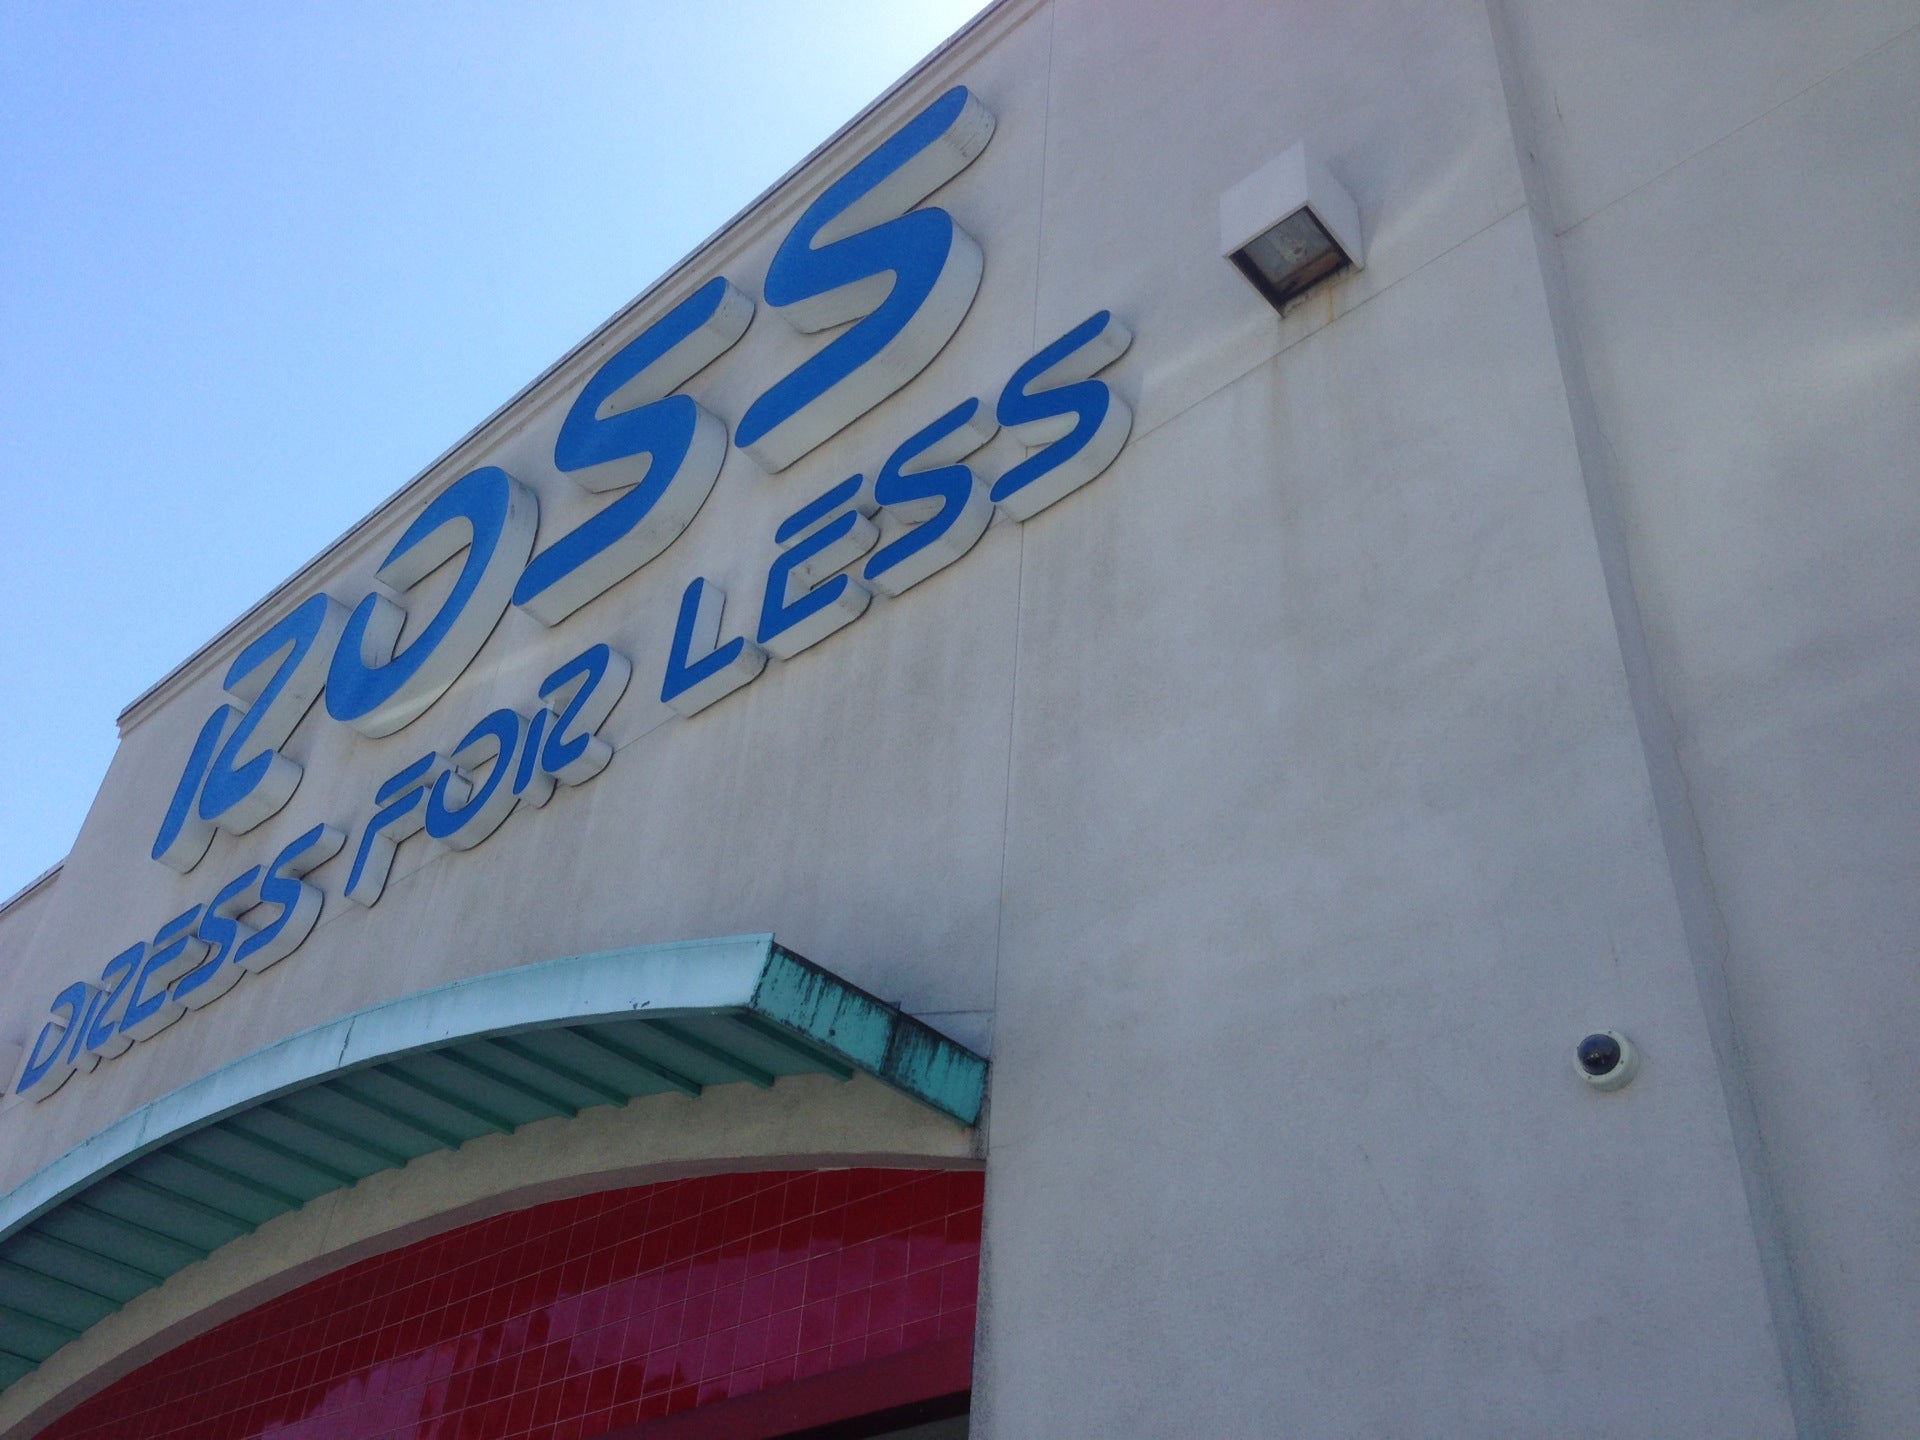 ROSS DRESS FOR LESS - 87 Photos & 105 Reviews - 7060 W Sunset Blvd